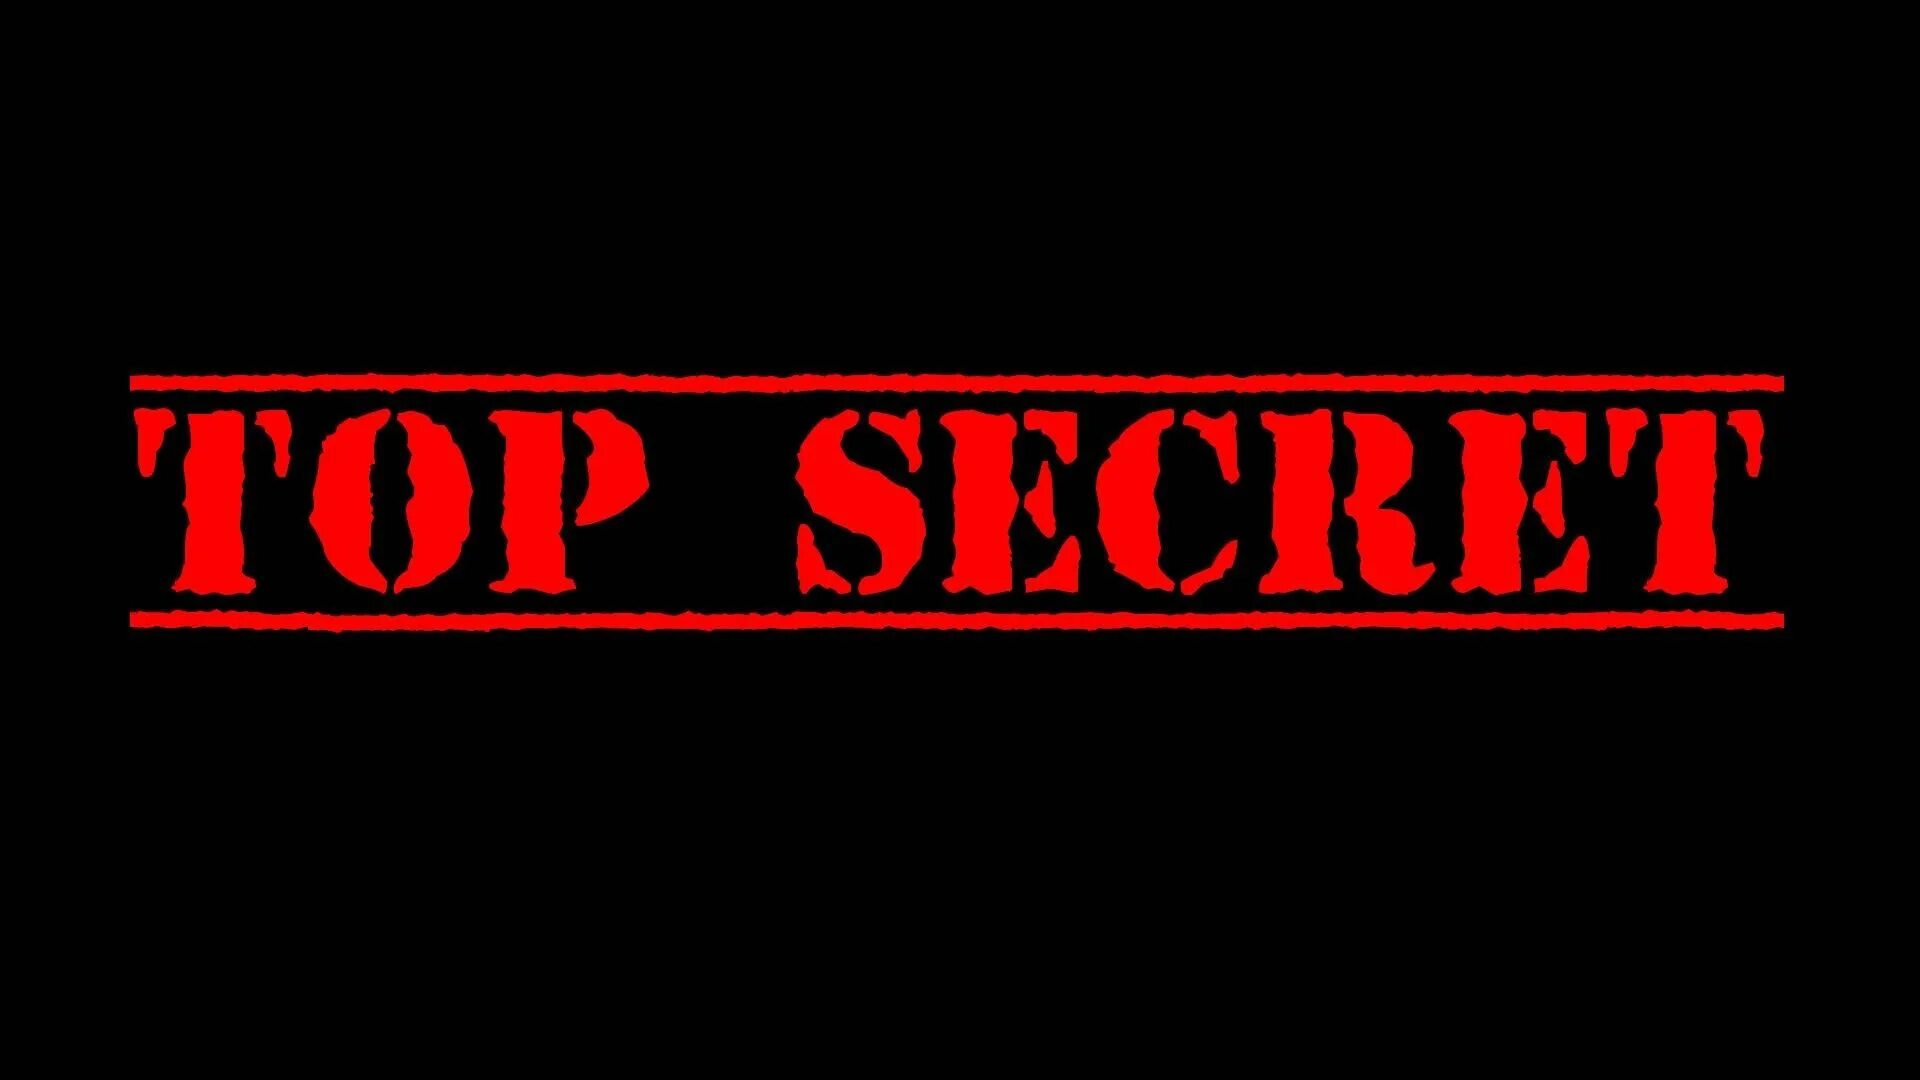 Www secret. Top Secret. Надпись Top Secret. Секретные надписи. Top Secret фото.